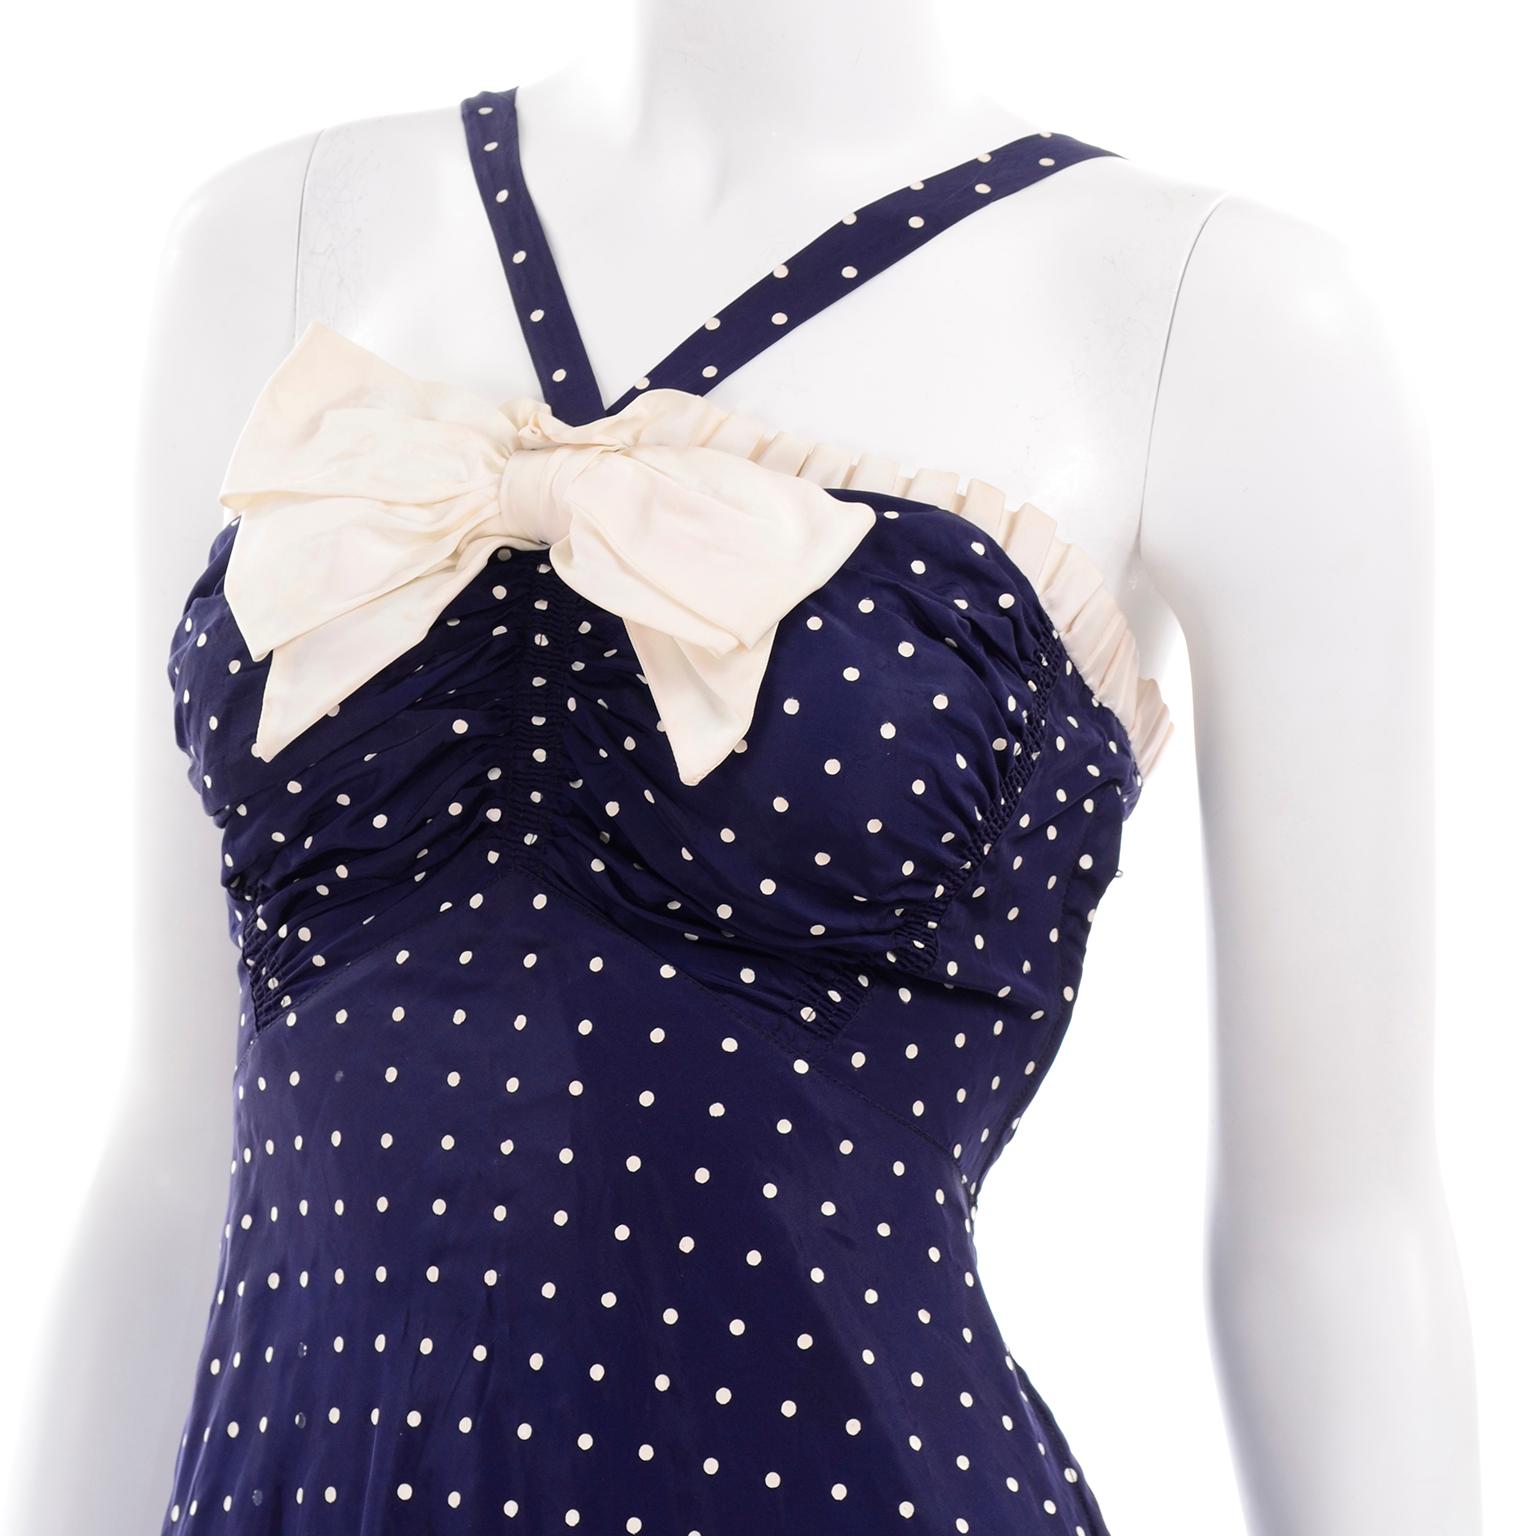  Vintage Navy Blue & White Polka Dot Halter Dress W Bow & Bolero Jacket 1